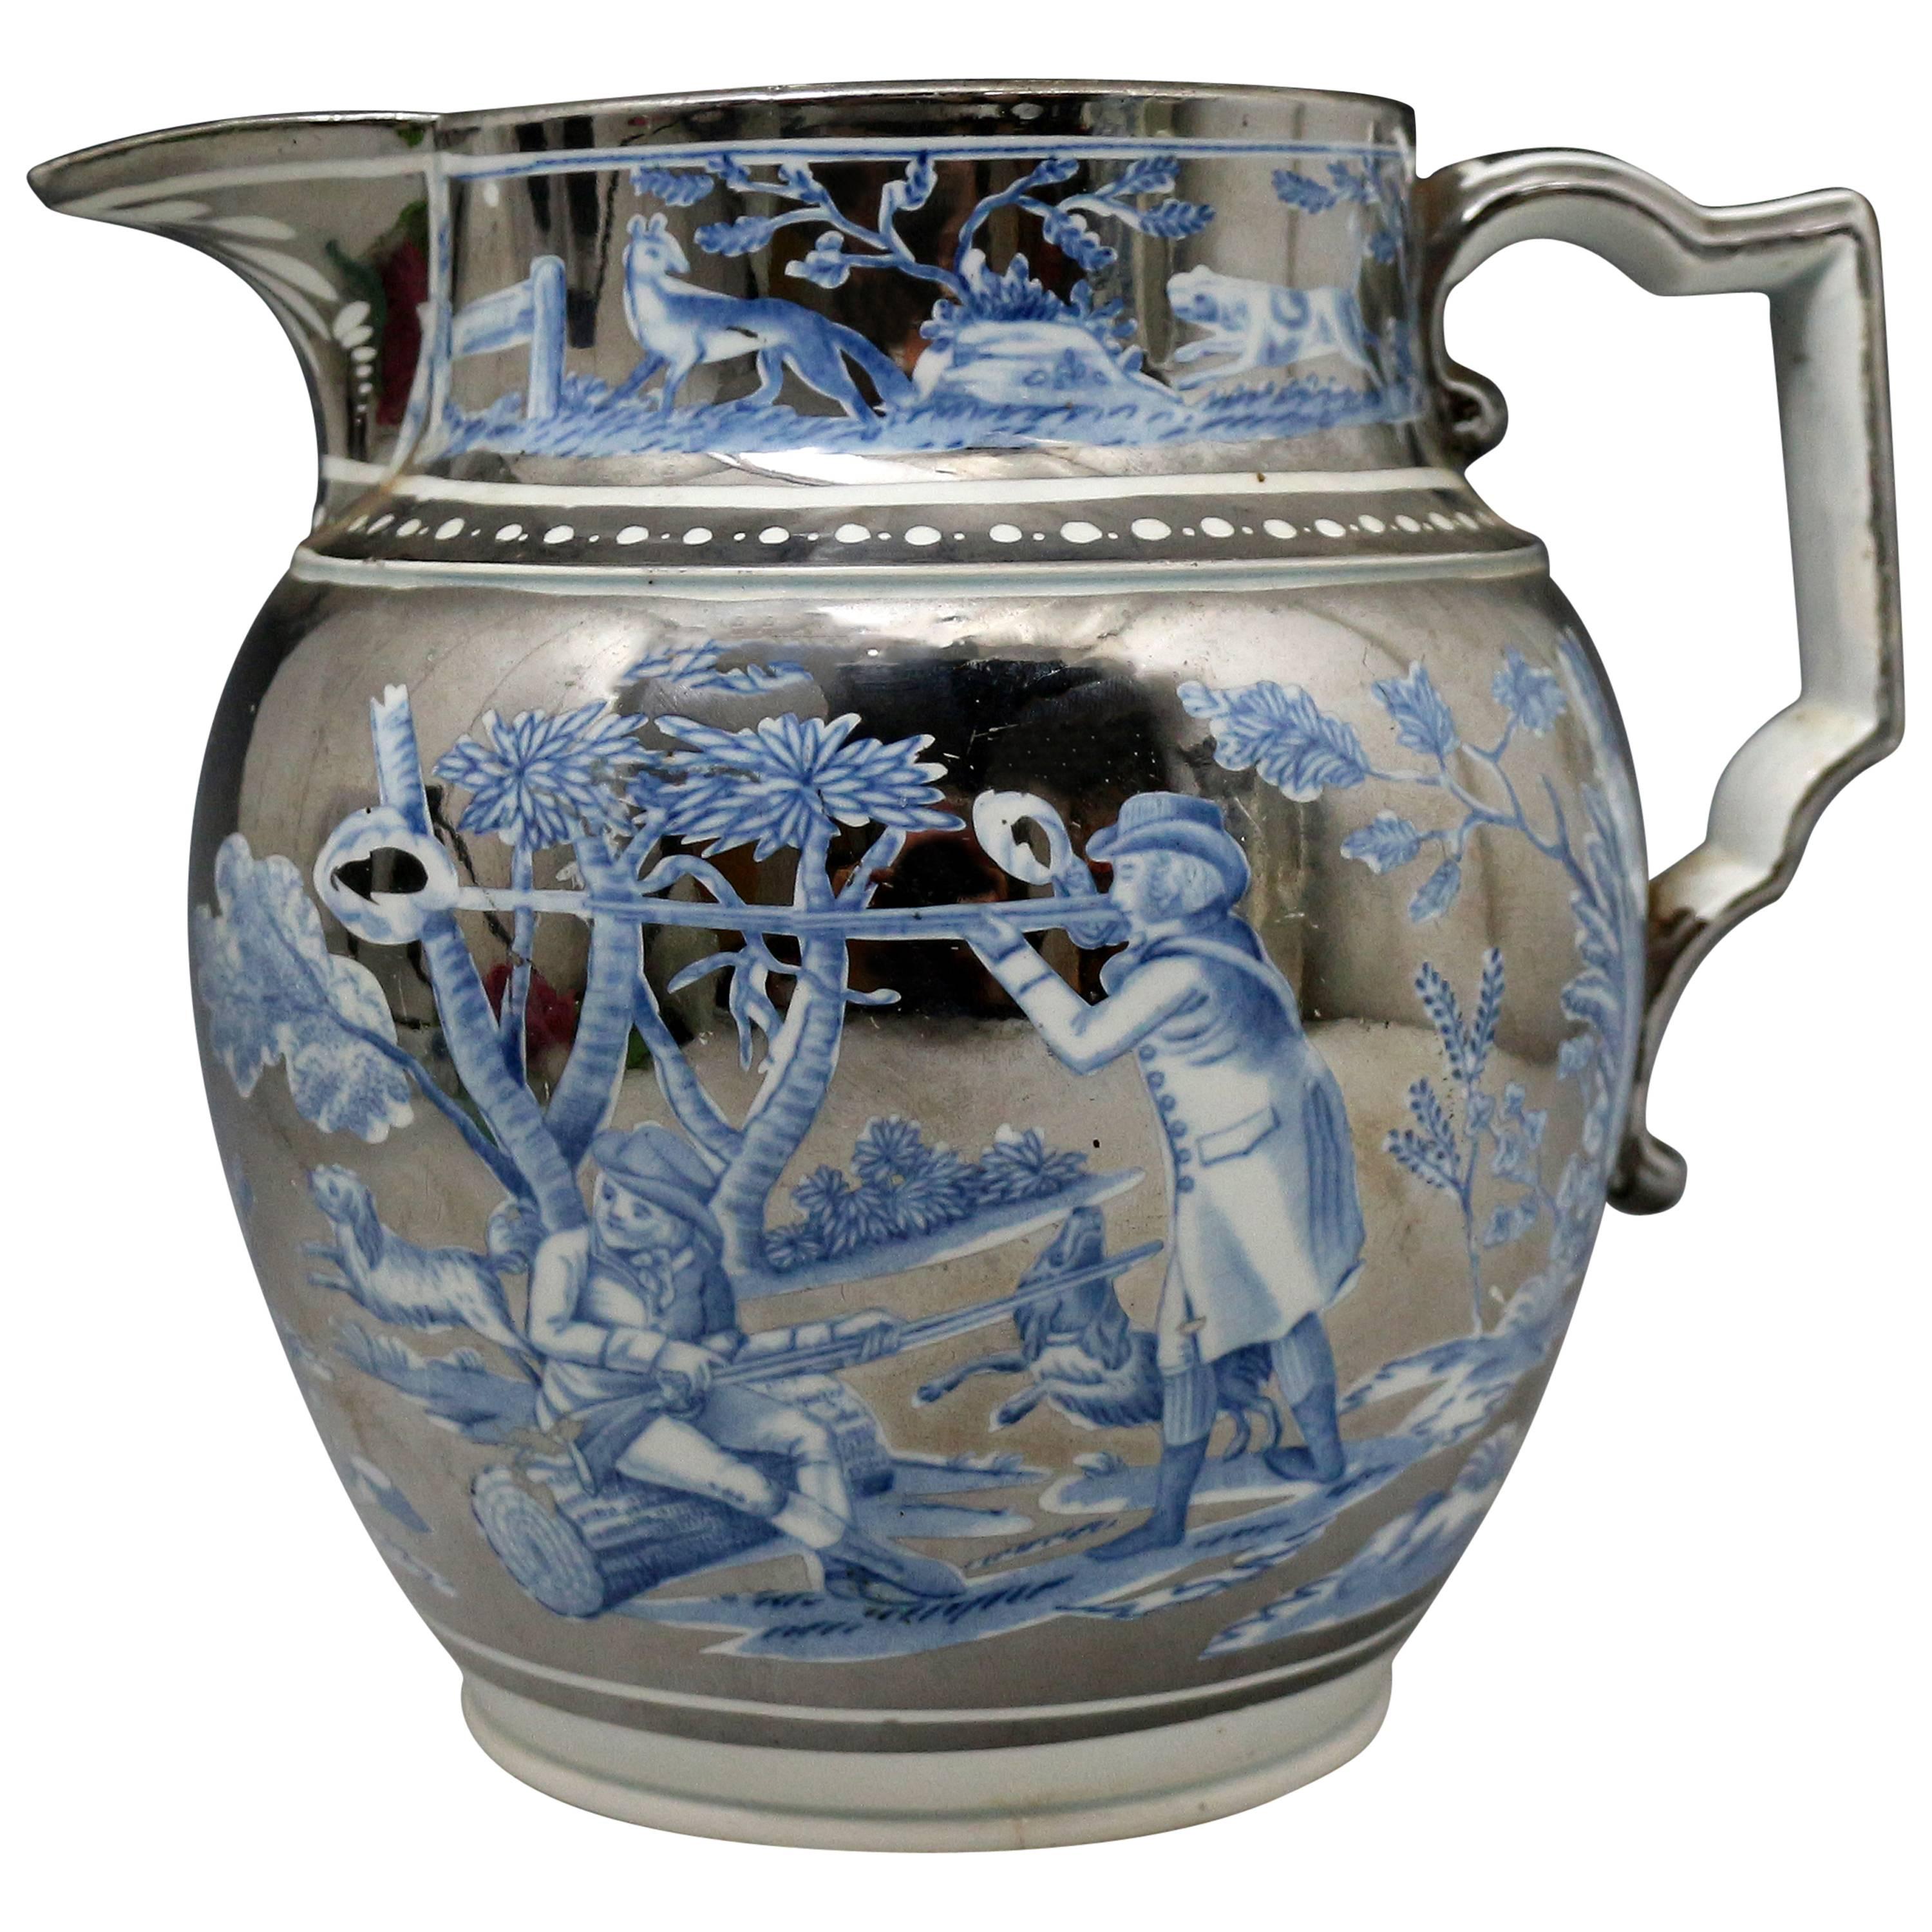 Antique Silver Luster Pottery Pitcher with Underglaze Blue Decoration